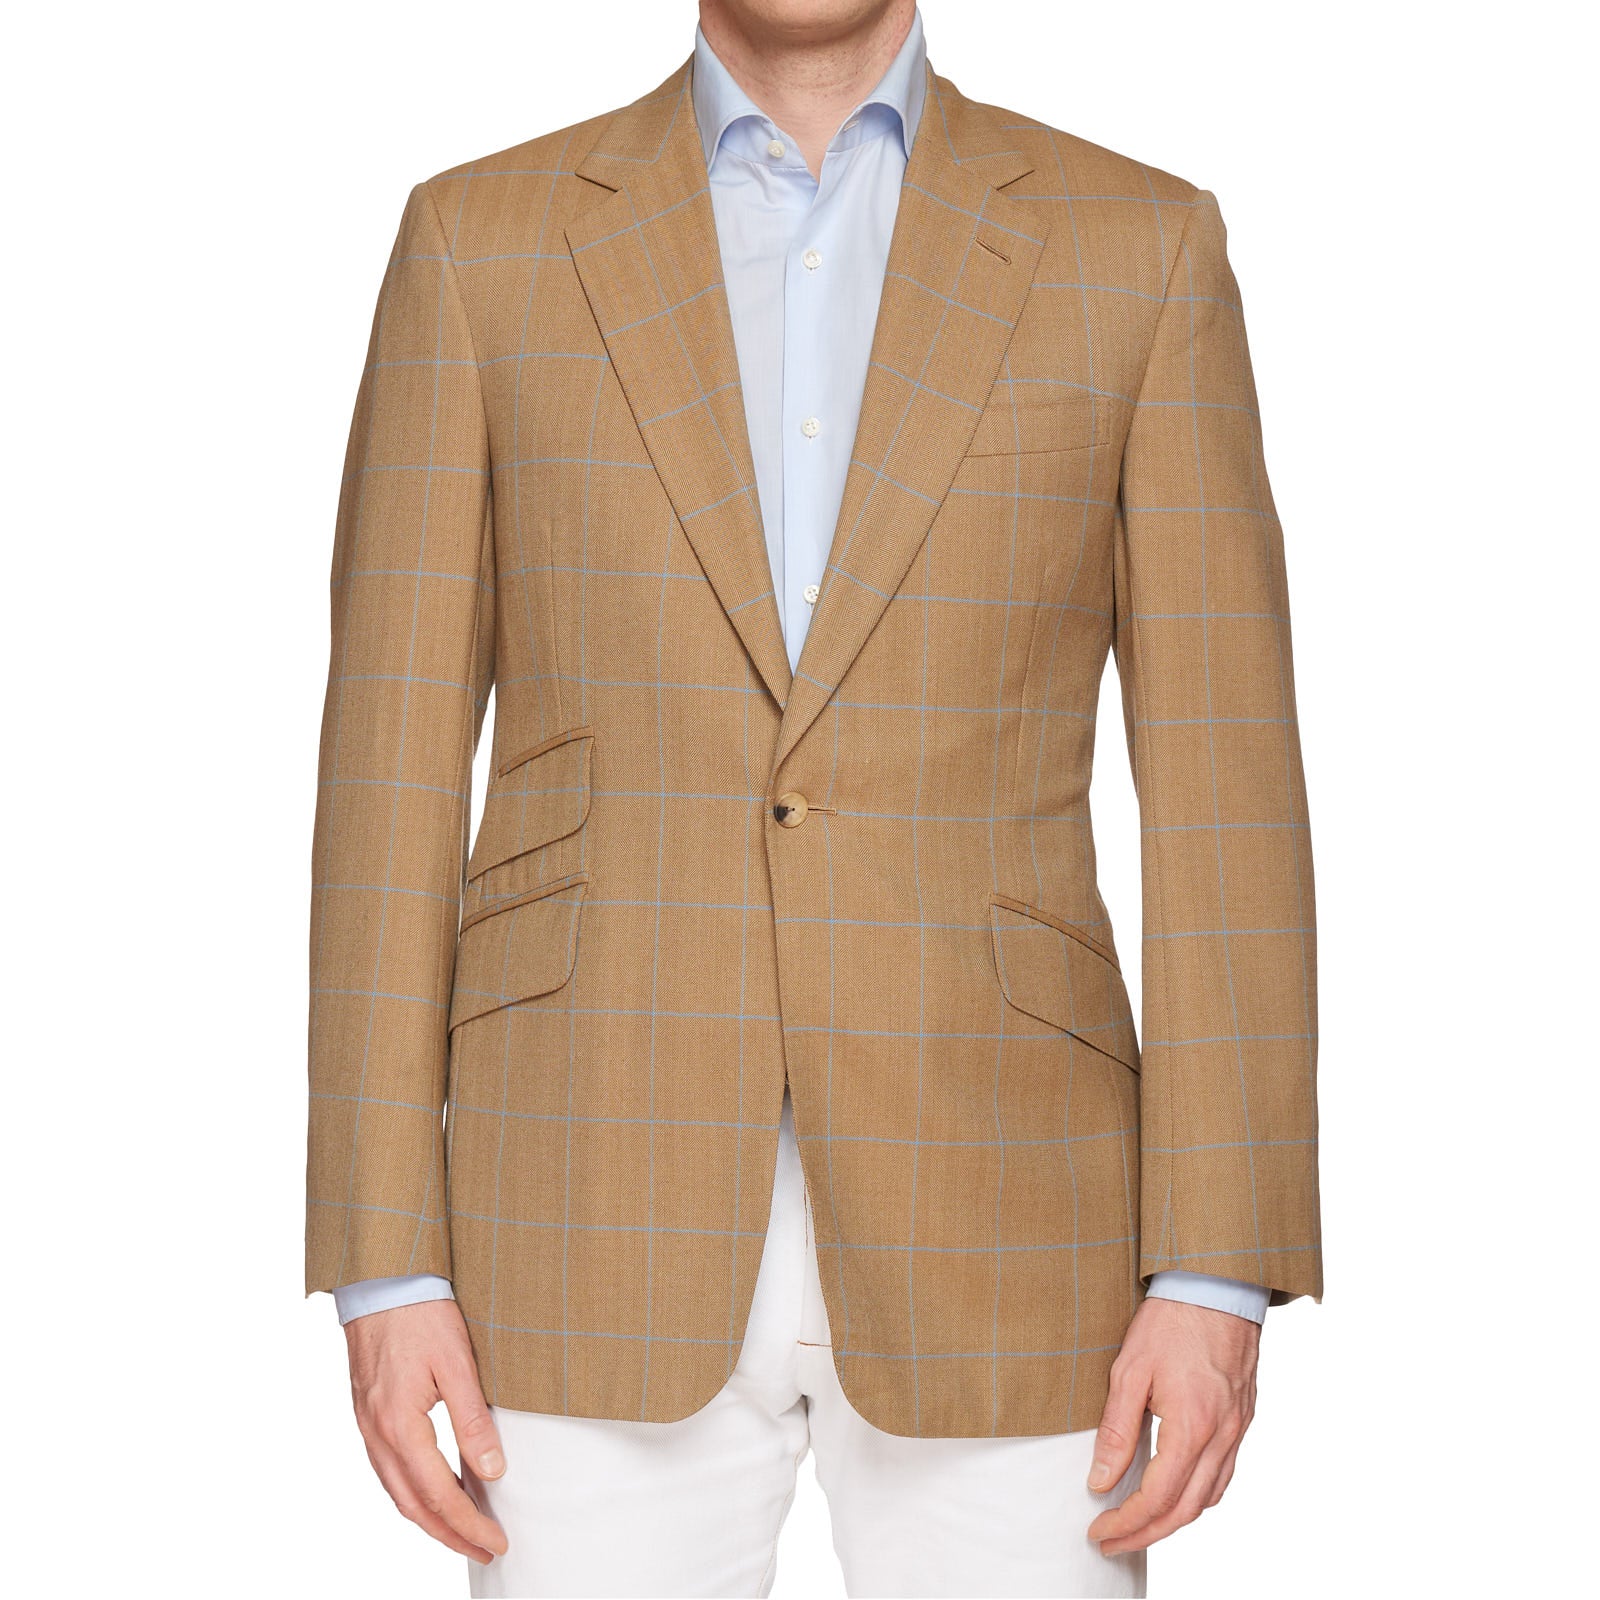 HUNTSMAN Savile Row Bespoke Tan Herringbone Plaid Wool 1 Button Jacket NEW US 40 HUNTSMAN